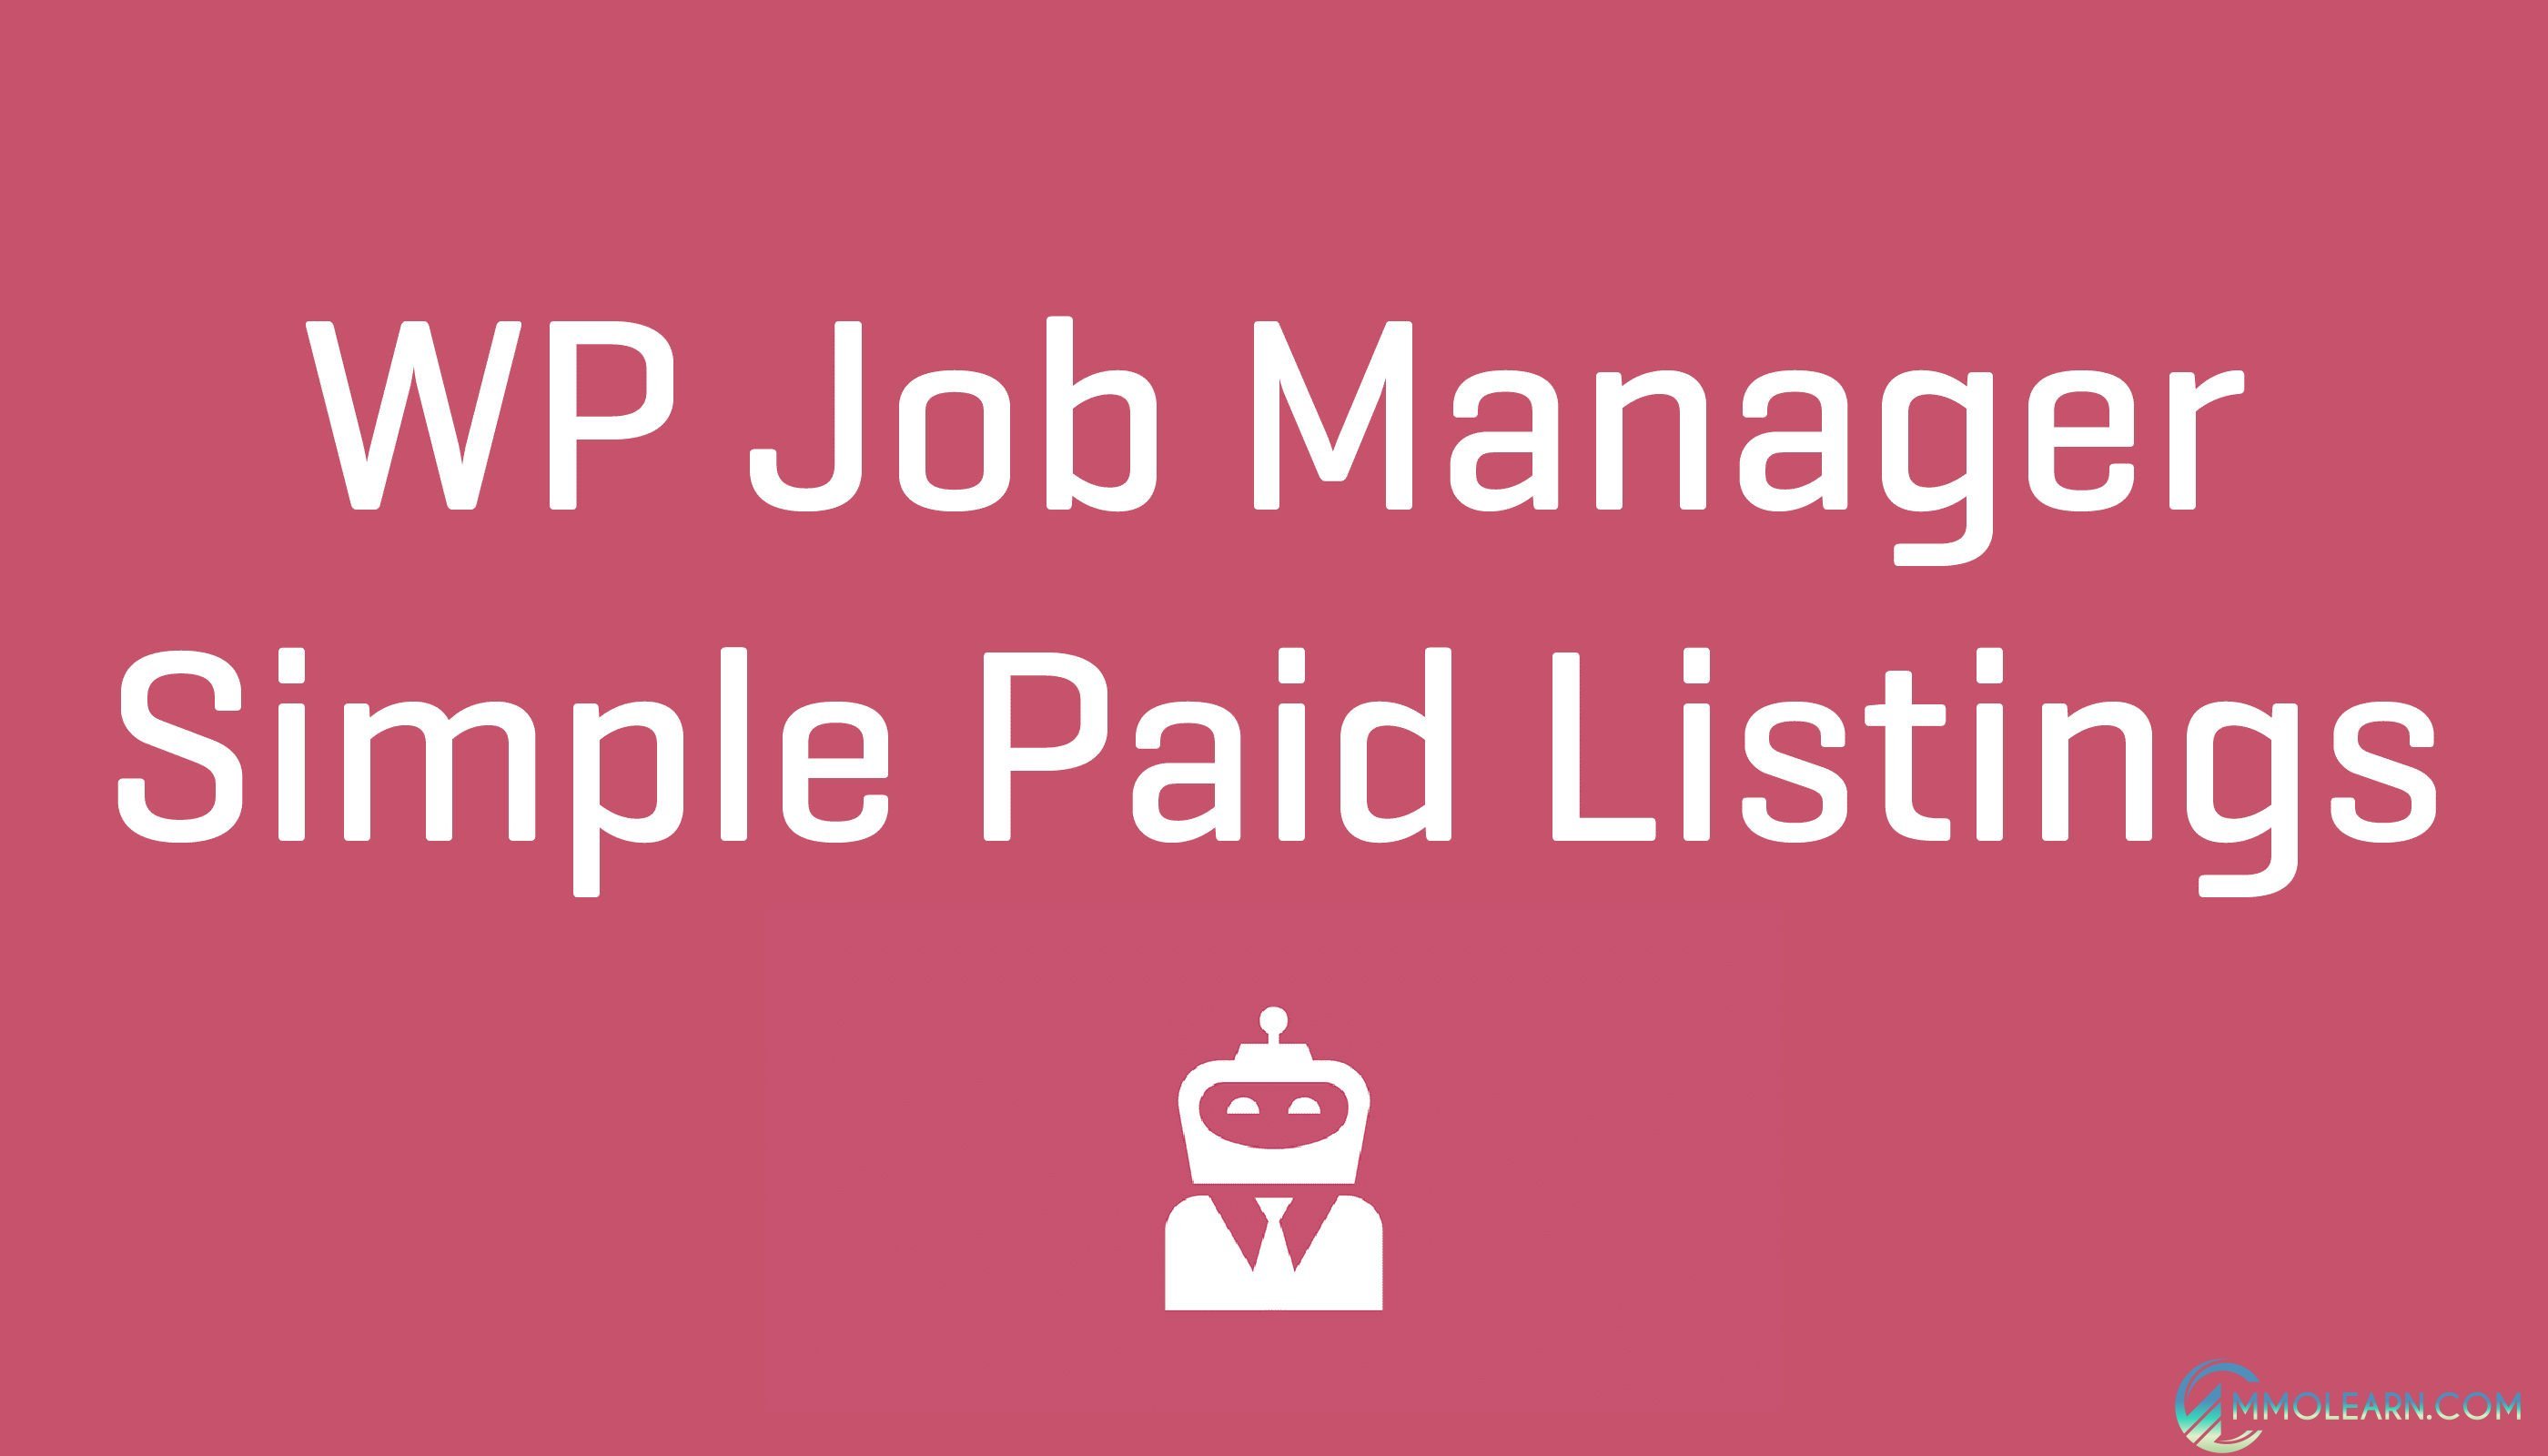 WP Job Manager - Simple Paid Listings.jpg